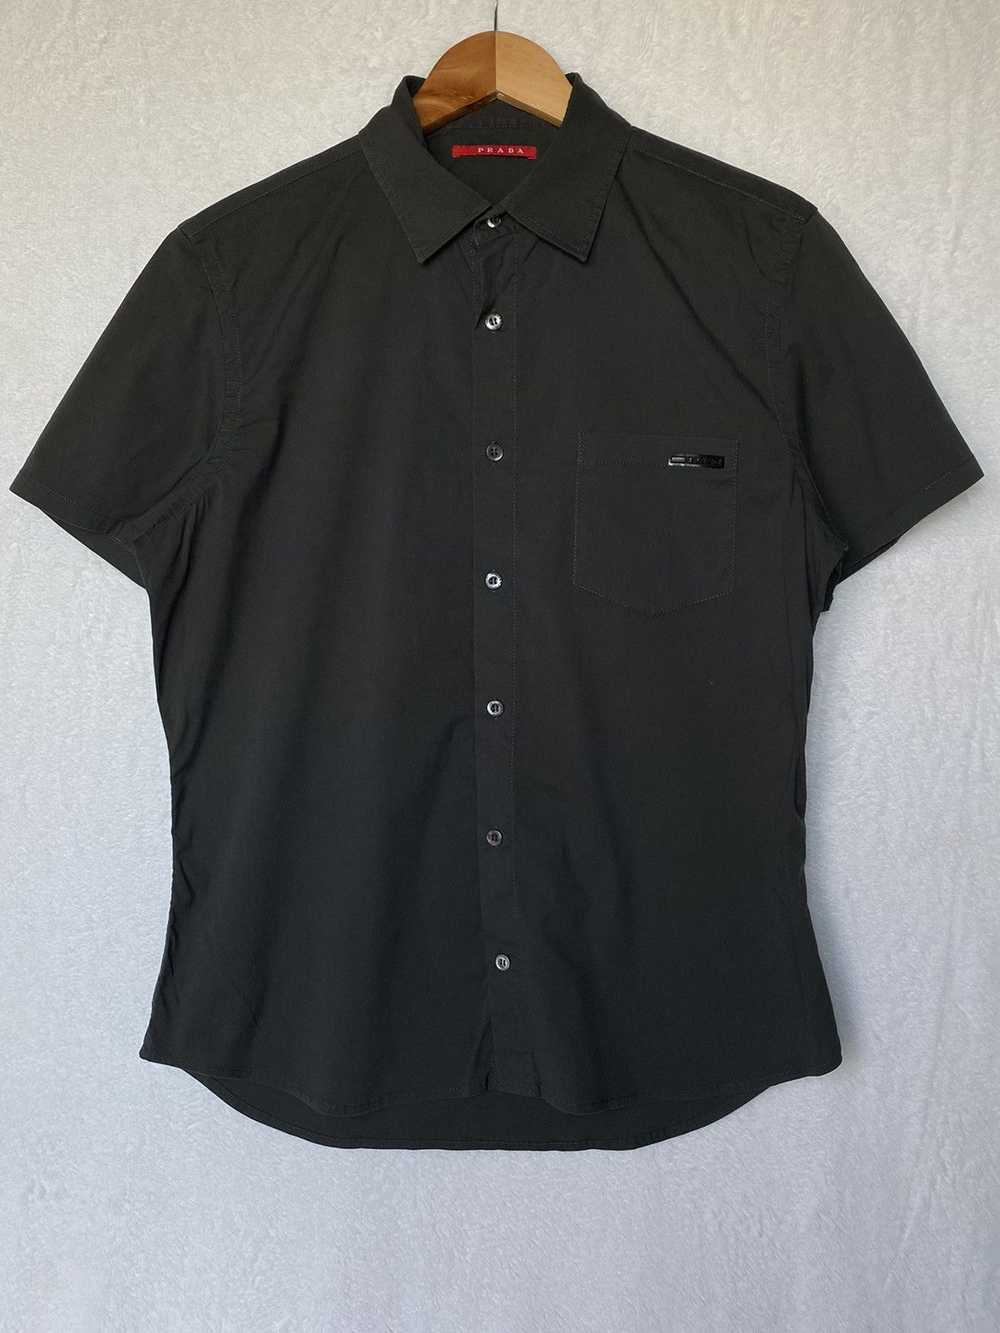 Prada Prada Button Up Shirt Black Tab Luxury Stre… - image 2